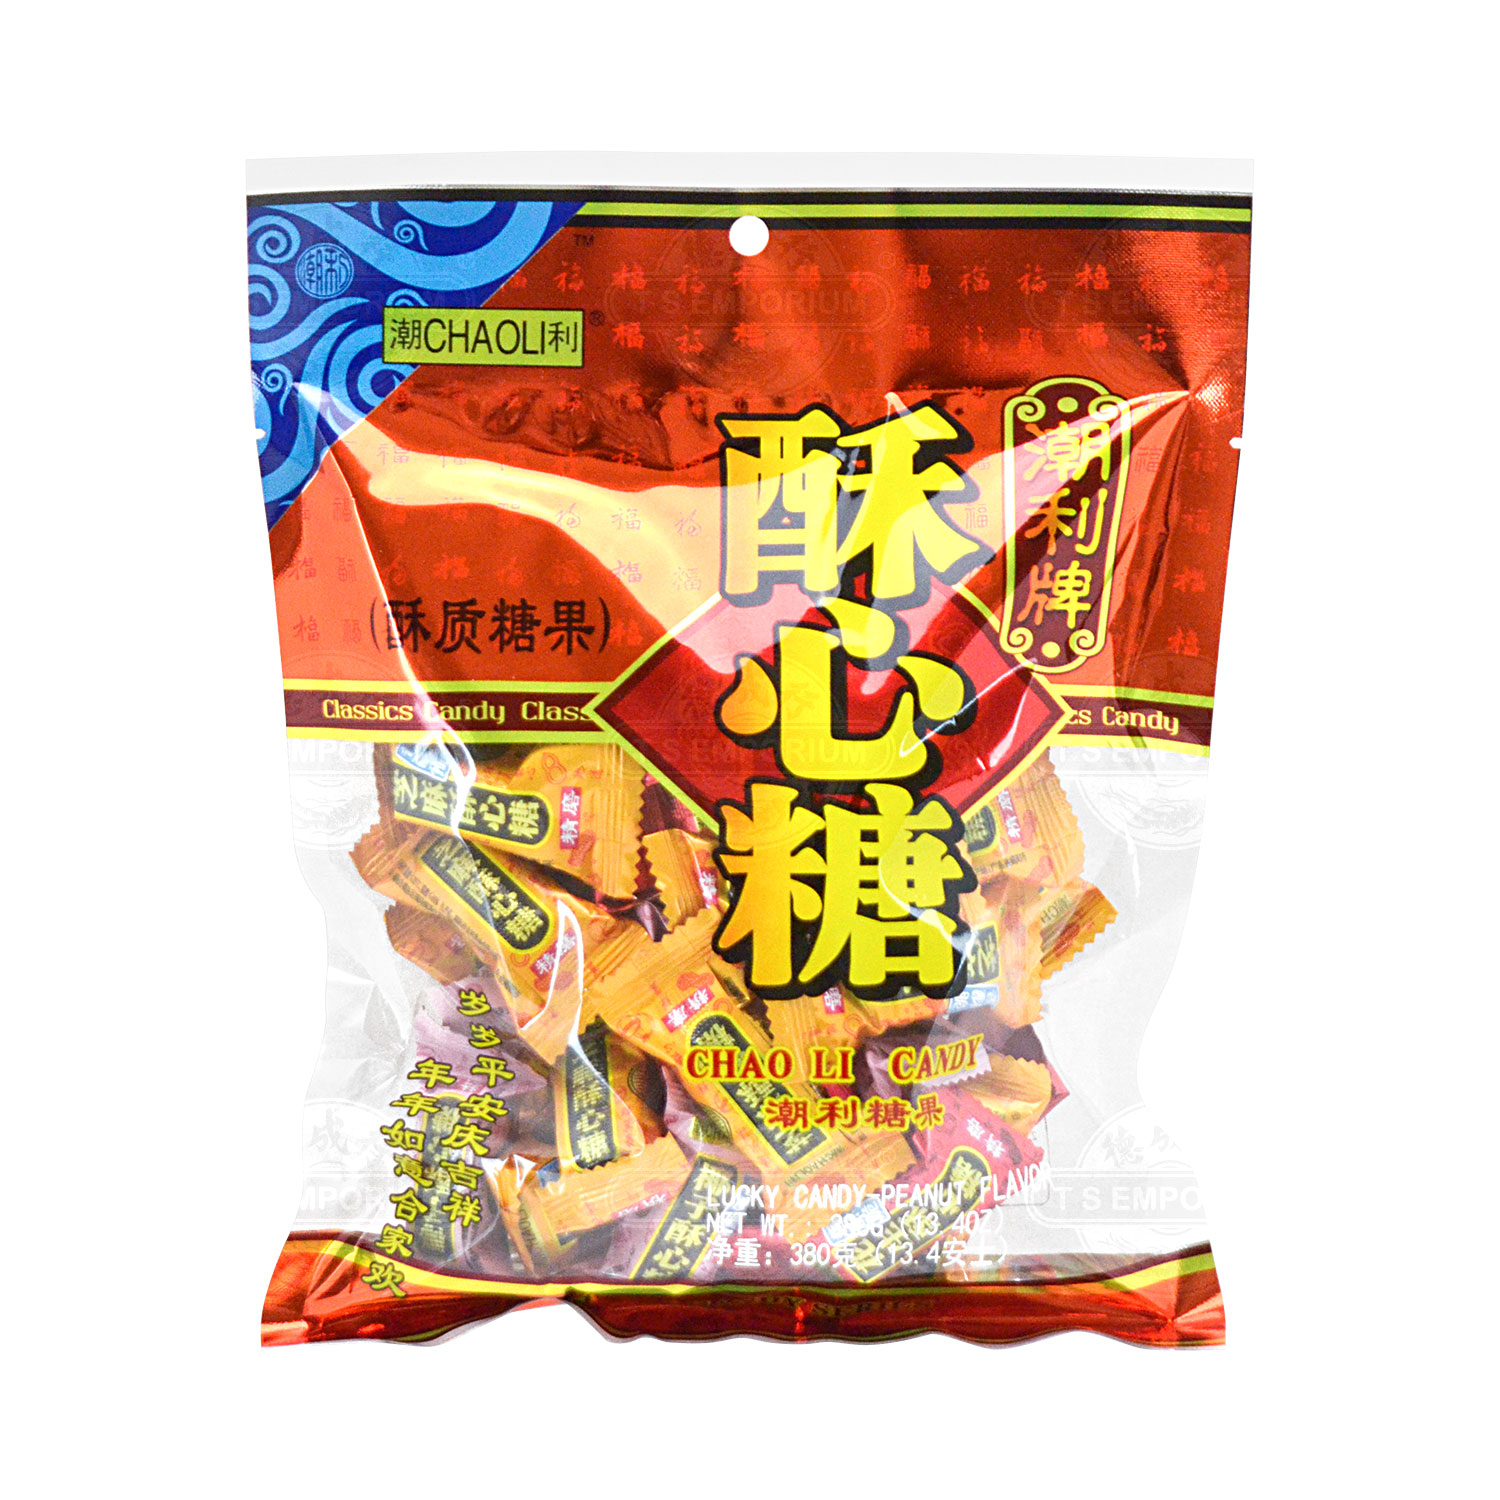 Chaoli Lucky Candy Peanut Flavor 380g Tak Shing Hong 7836